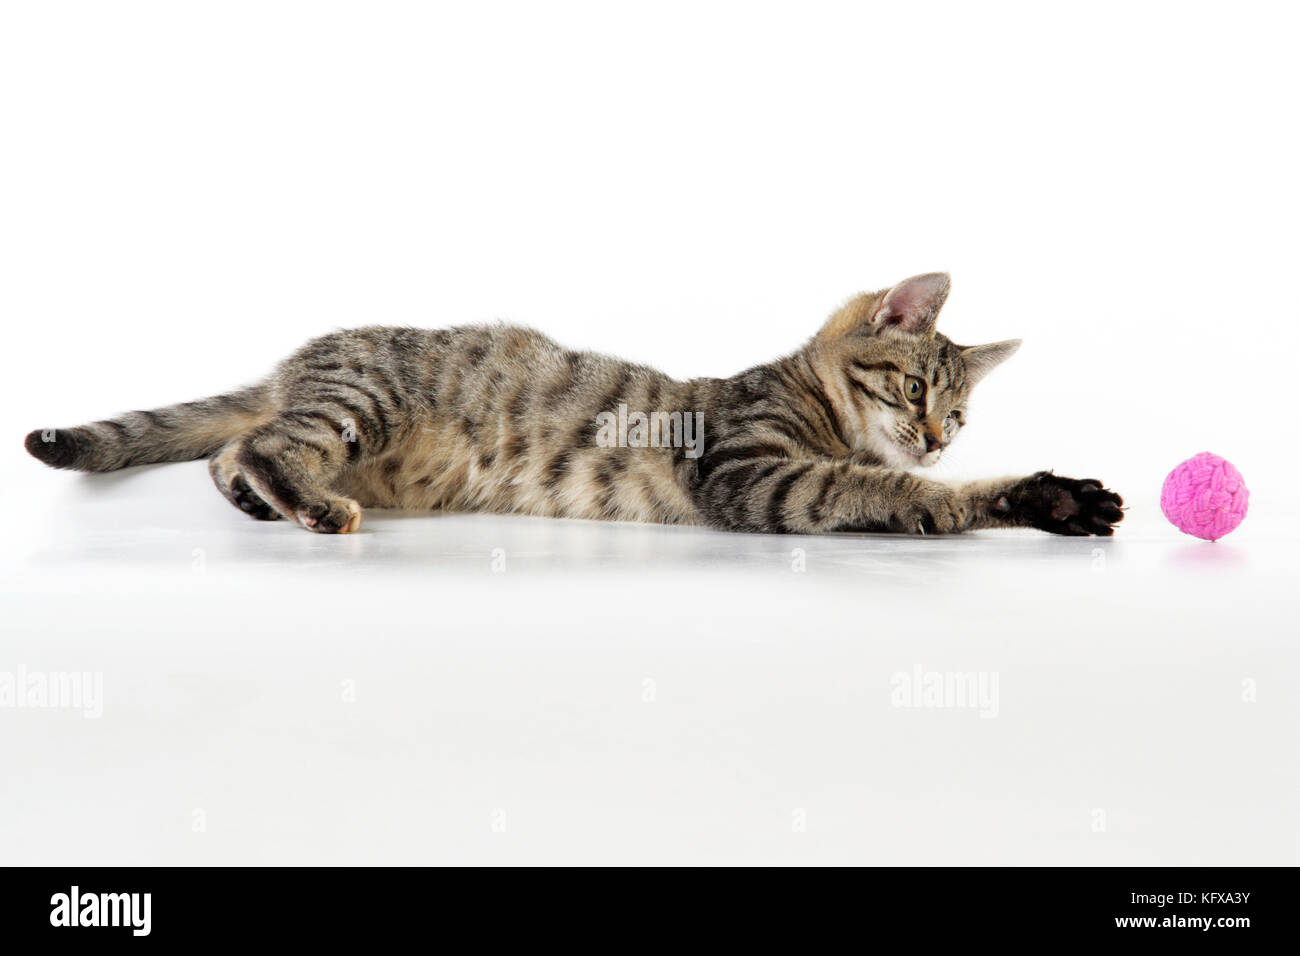 Gato - gatito jugando con la pelota de juguete Fotografía de stock - Alamy